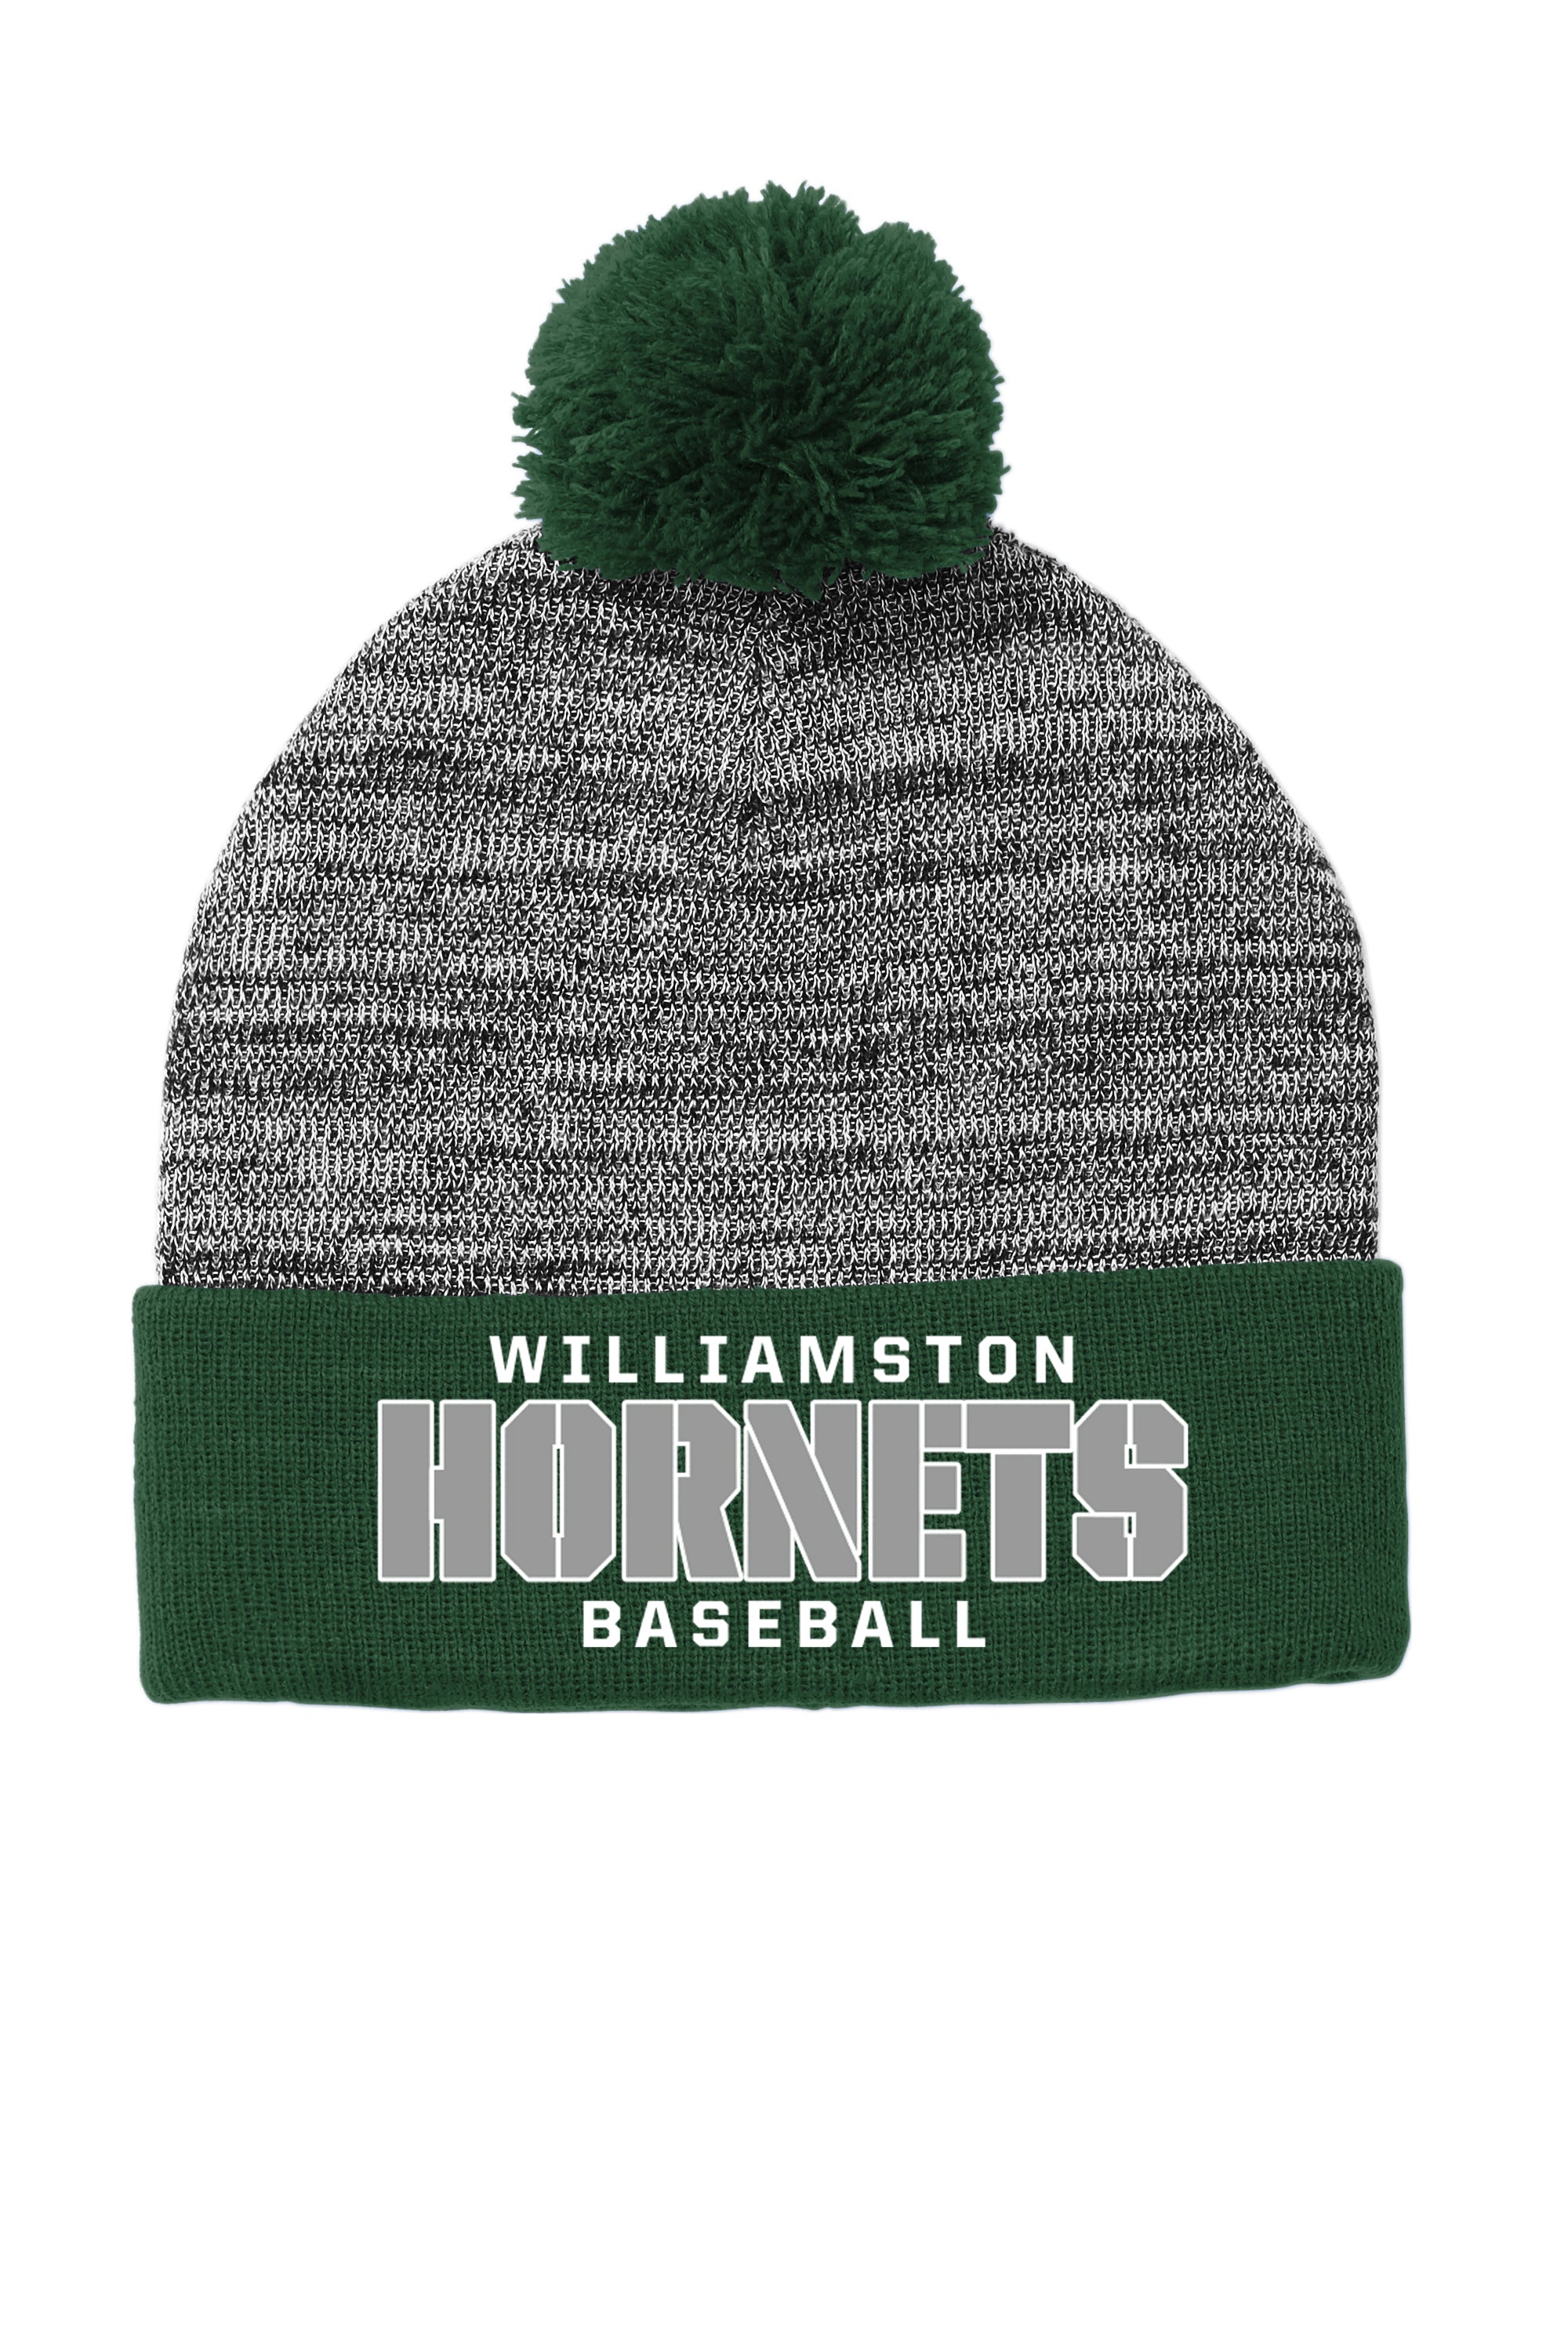 Williamston Baseball - Hats